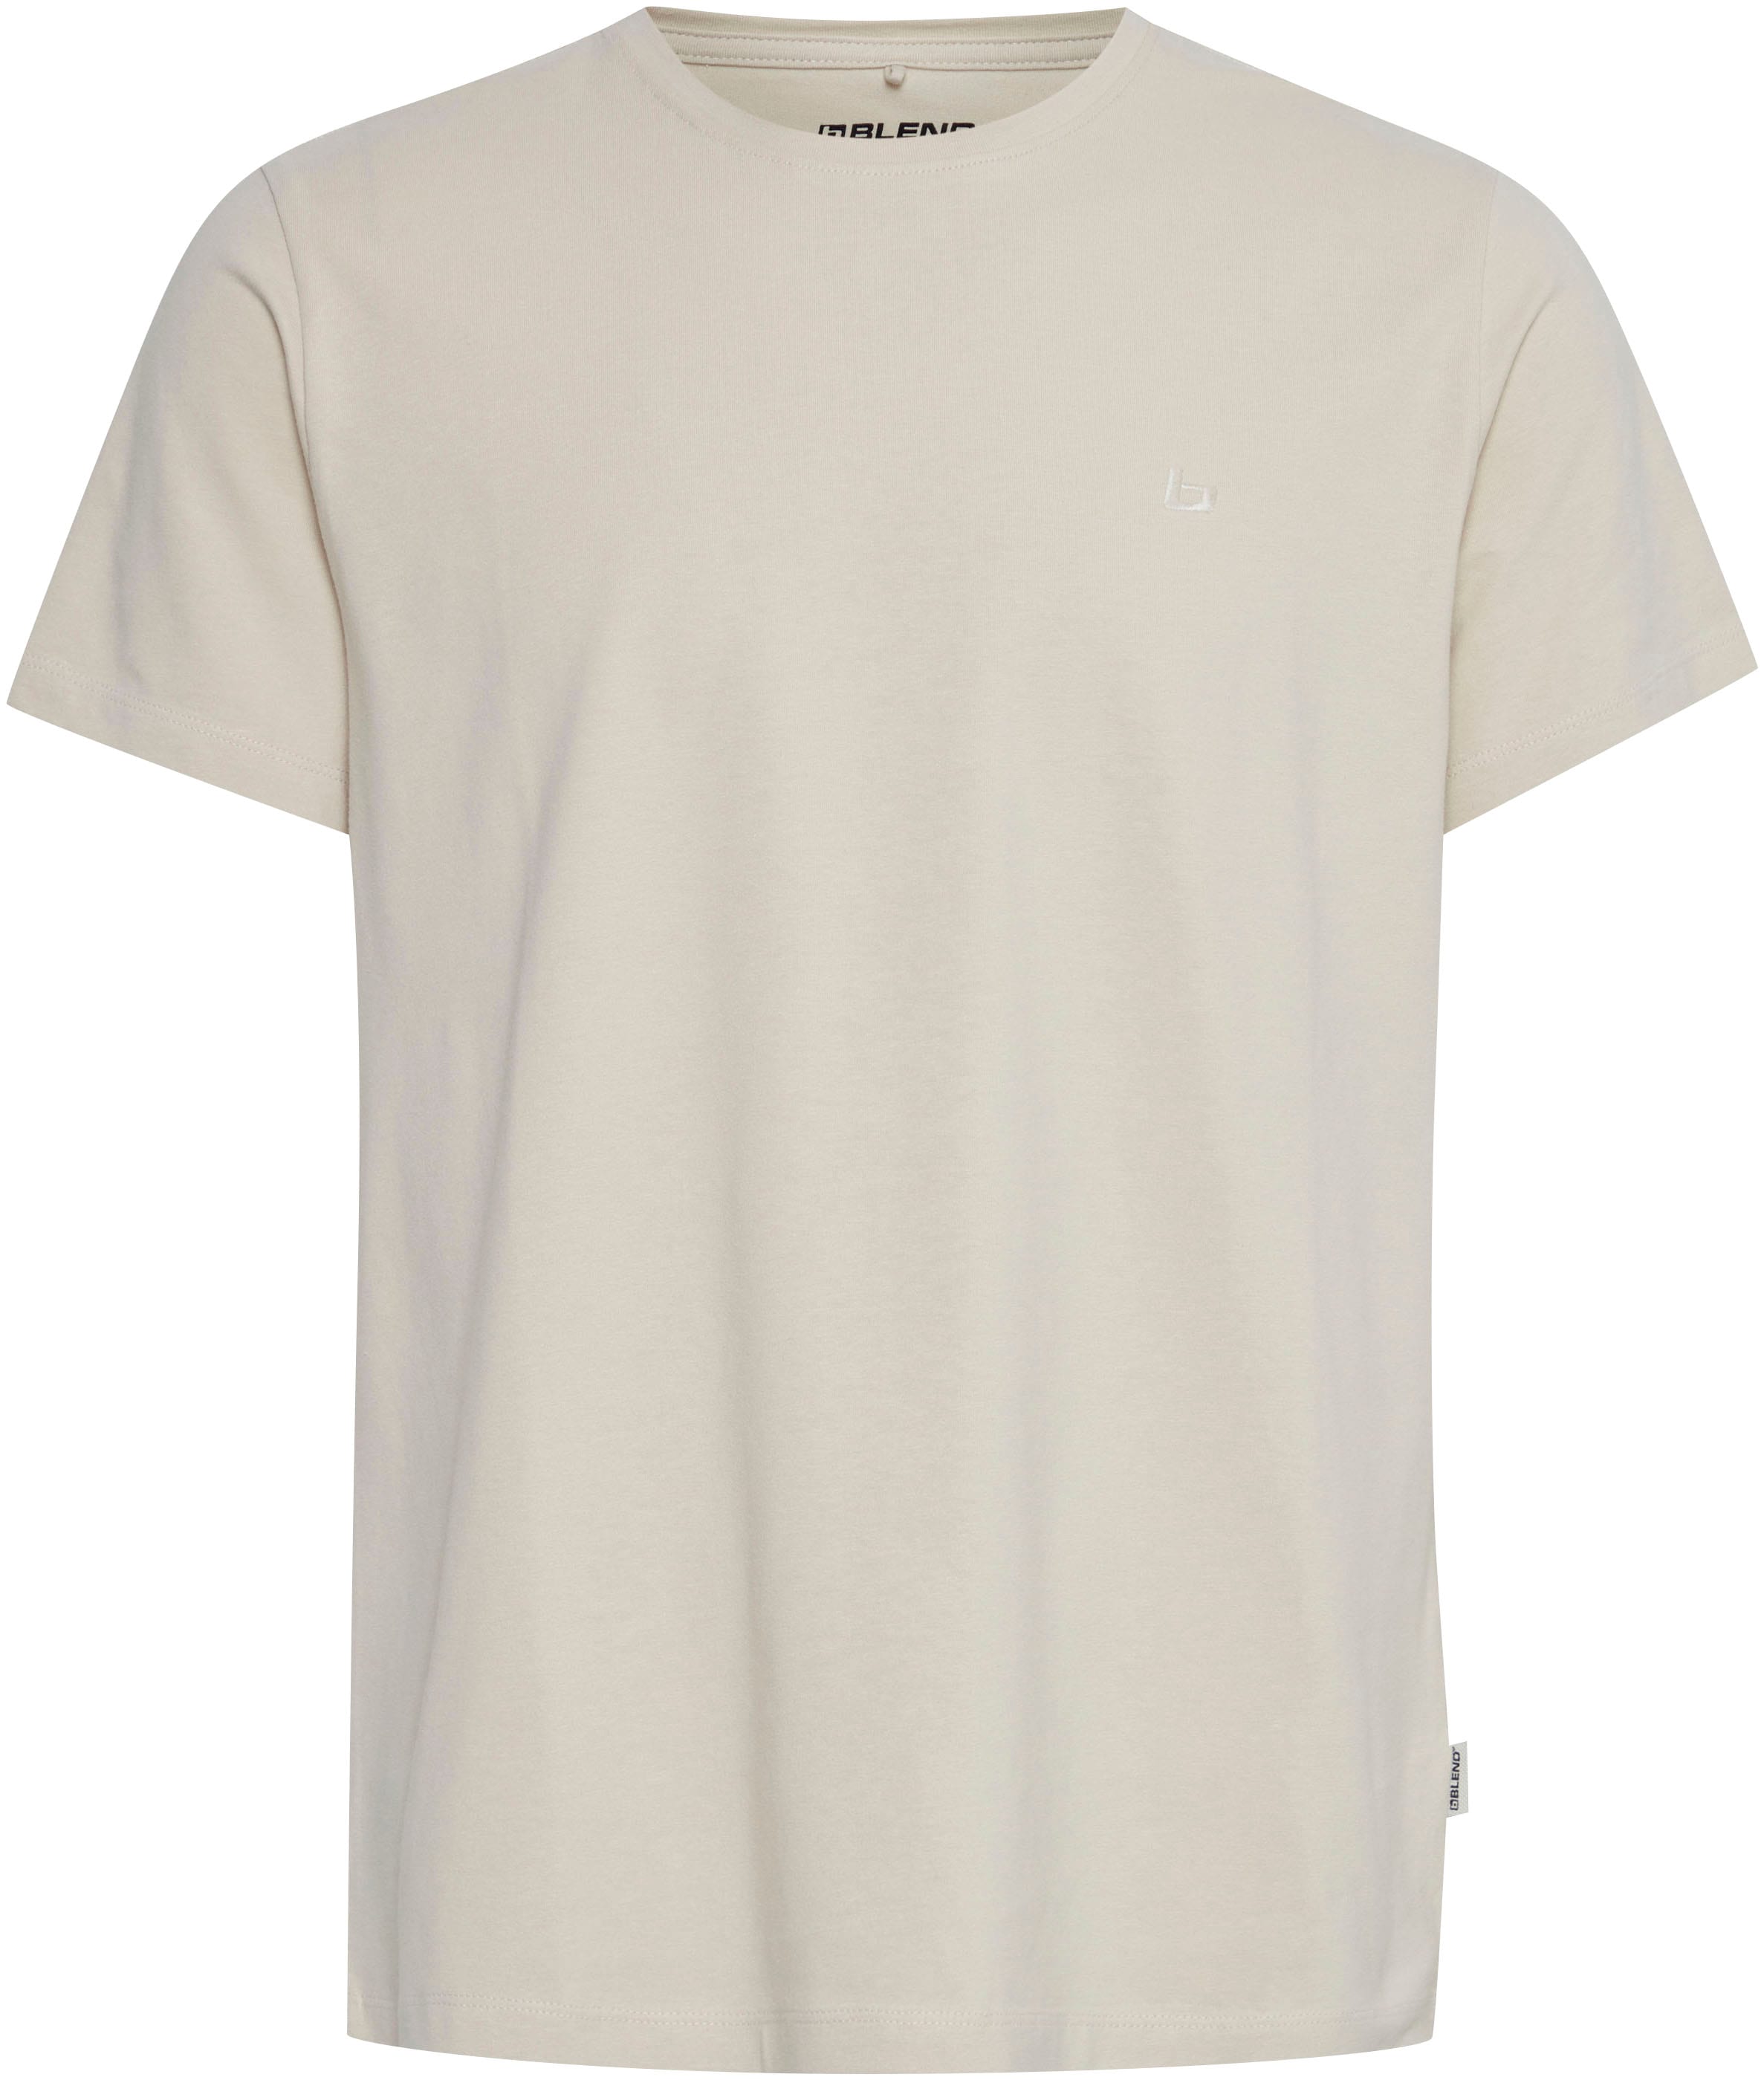 Blend 2-in-1-Langarmshirt »BL T-shirt BHDinton crew« online kaufen